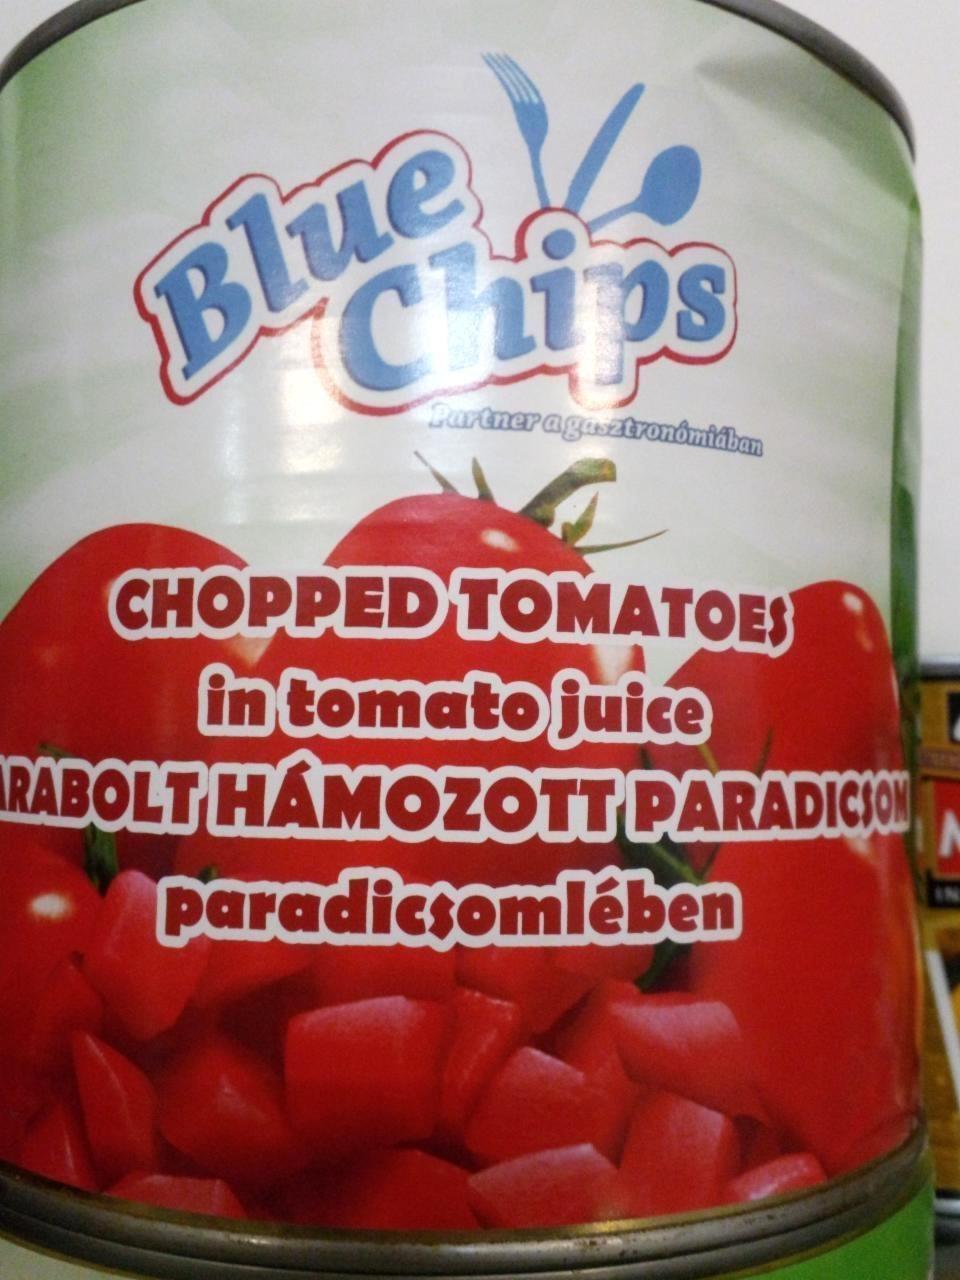 Képek - Darabolt hámozott paradicsom Blue Chips